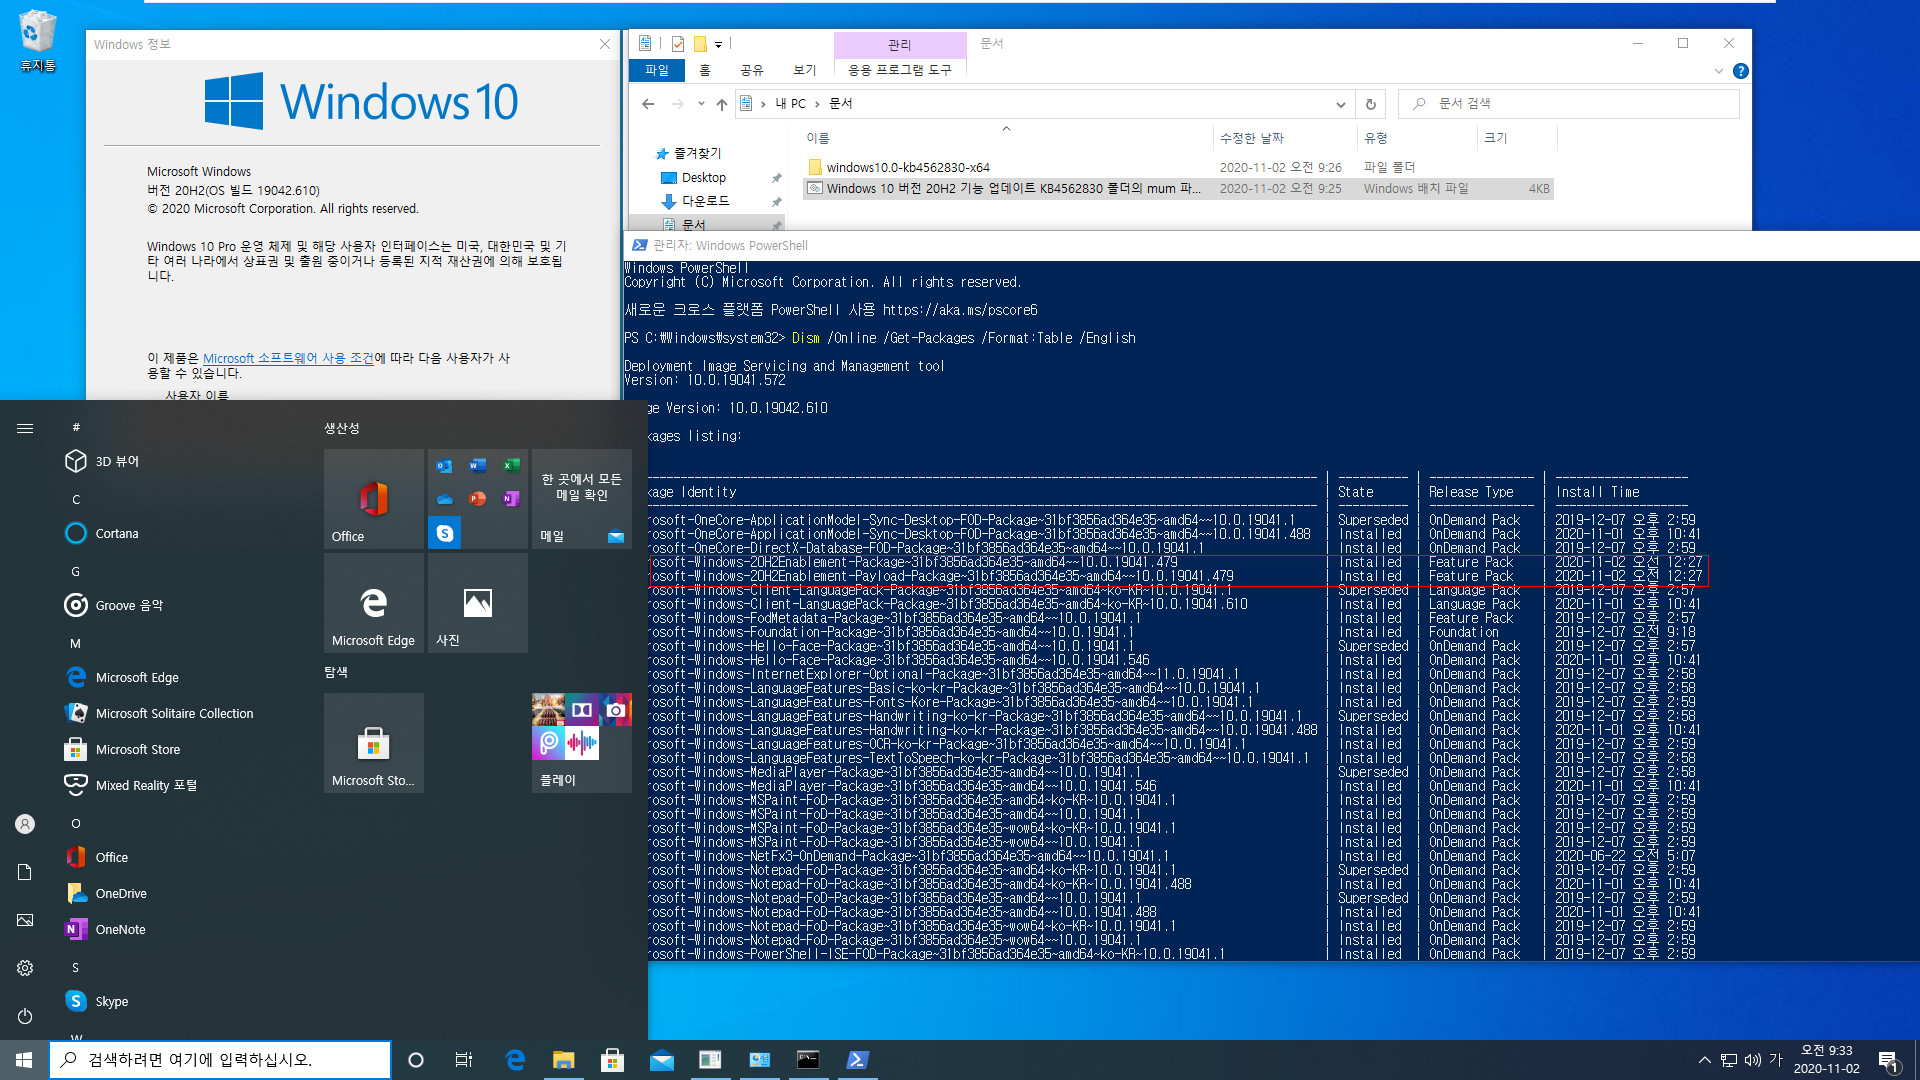 Windows 10 버전 20H2 기능 업데이트 KB4562830 폴더의 mum 파일들만 찾아서 설치하기.bat - 크로미엄 엣지 설치하지 않고 버전 20H2만 설치하기 테스트 2020-11-02_093348.jpg